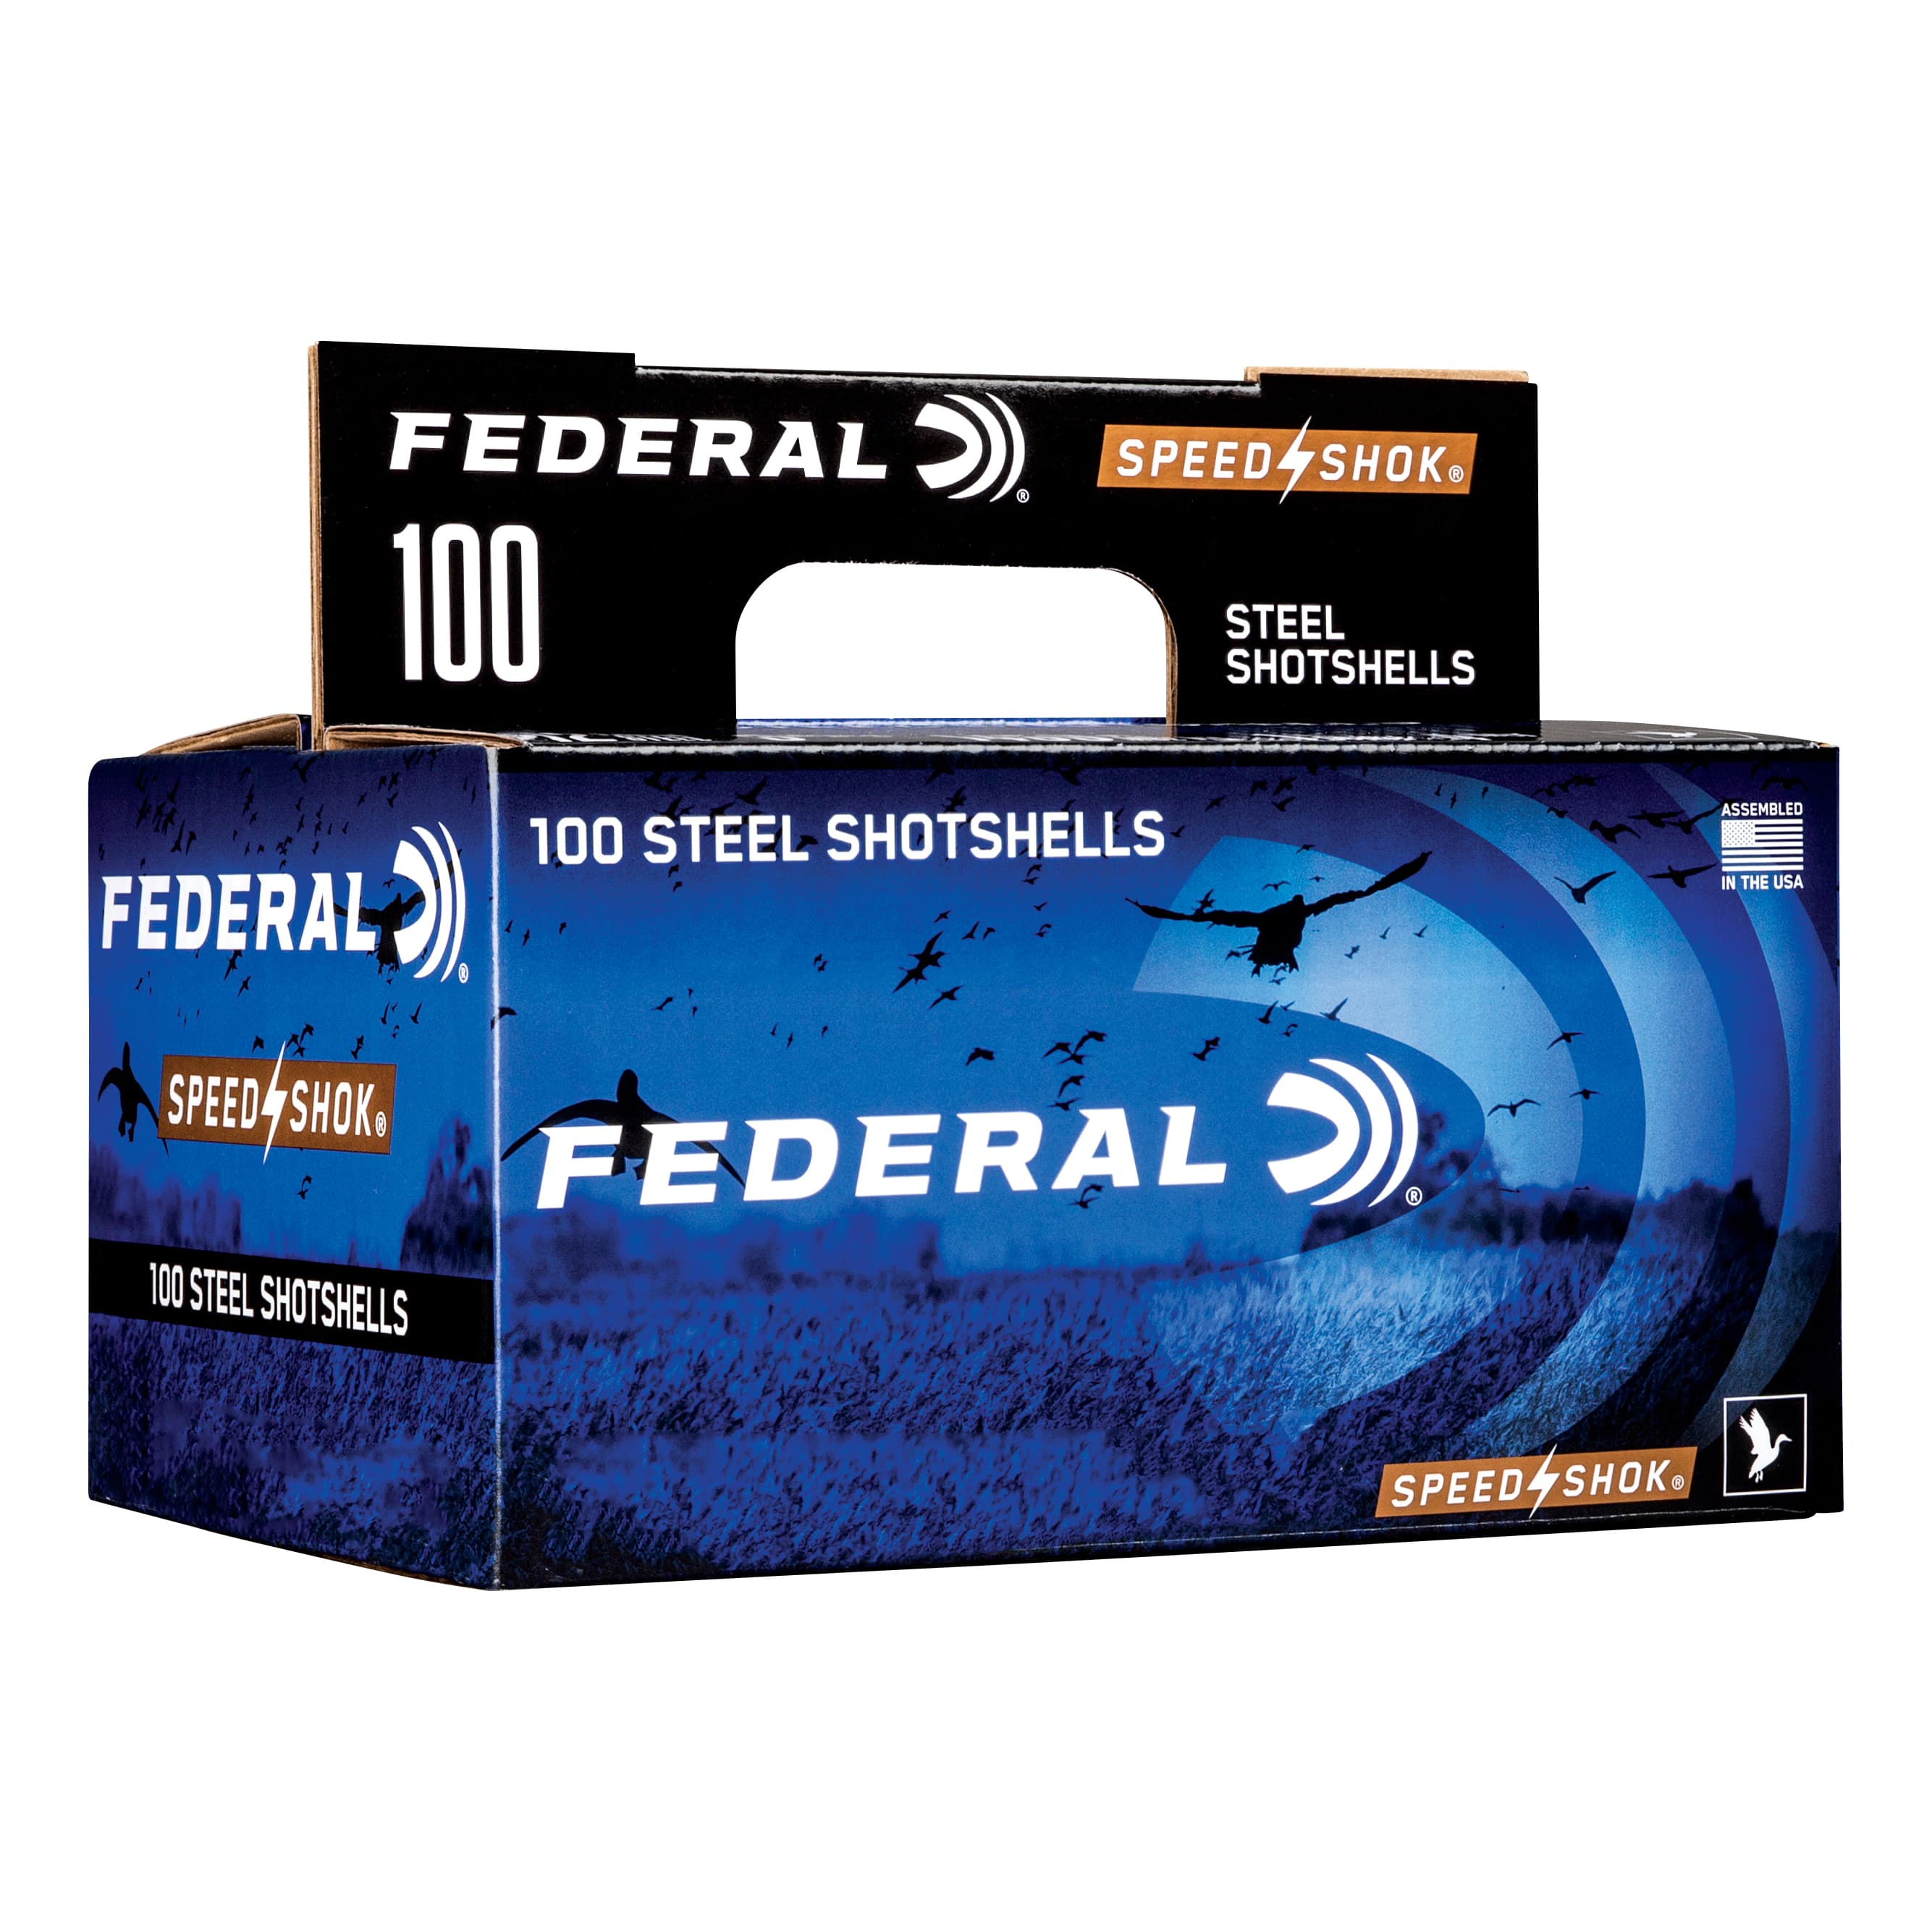 Federal® Upland Steel Shotshells